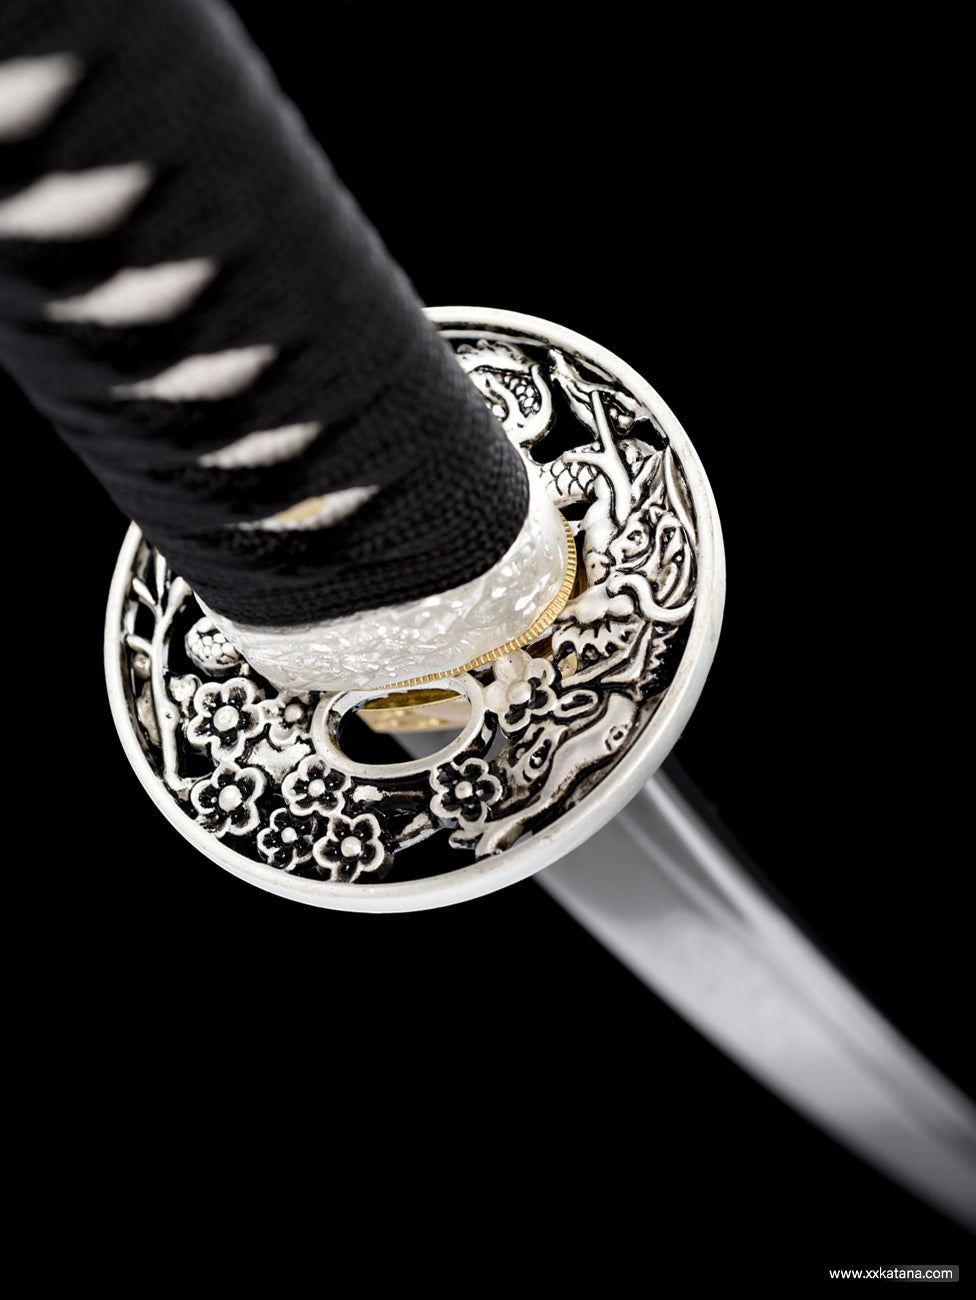 Black dragon forge folded steel katana Japanese sword